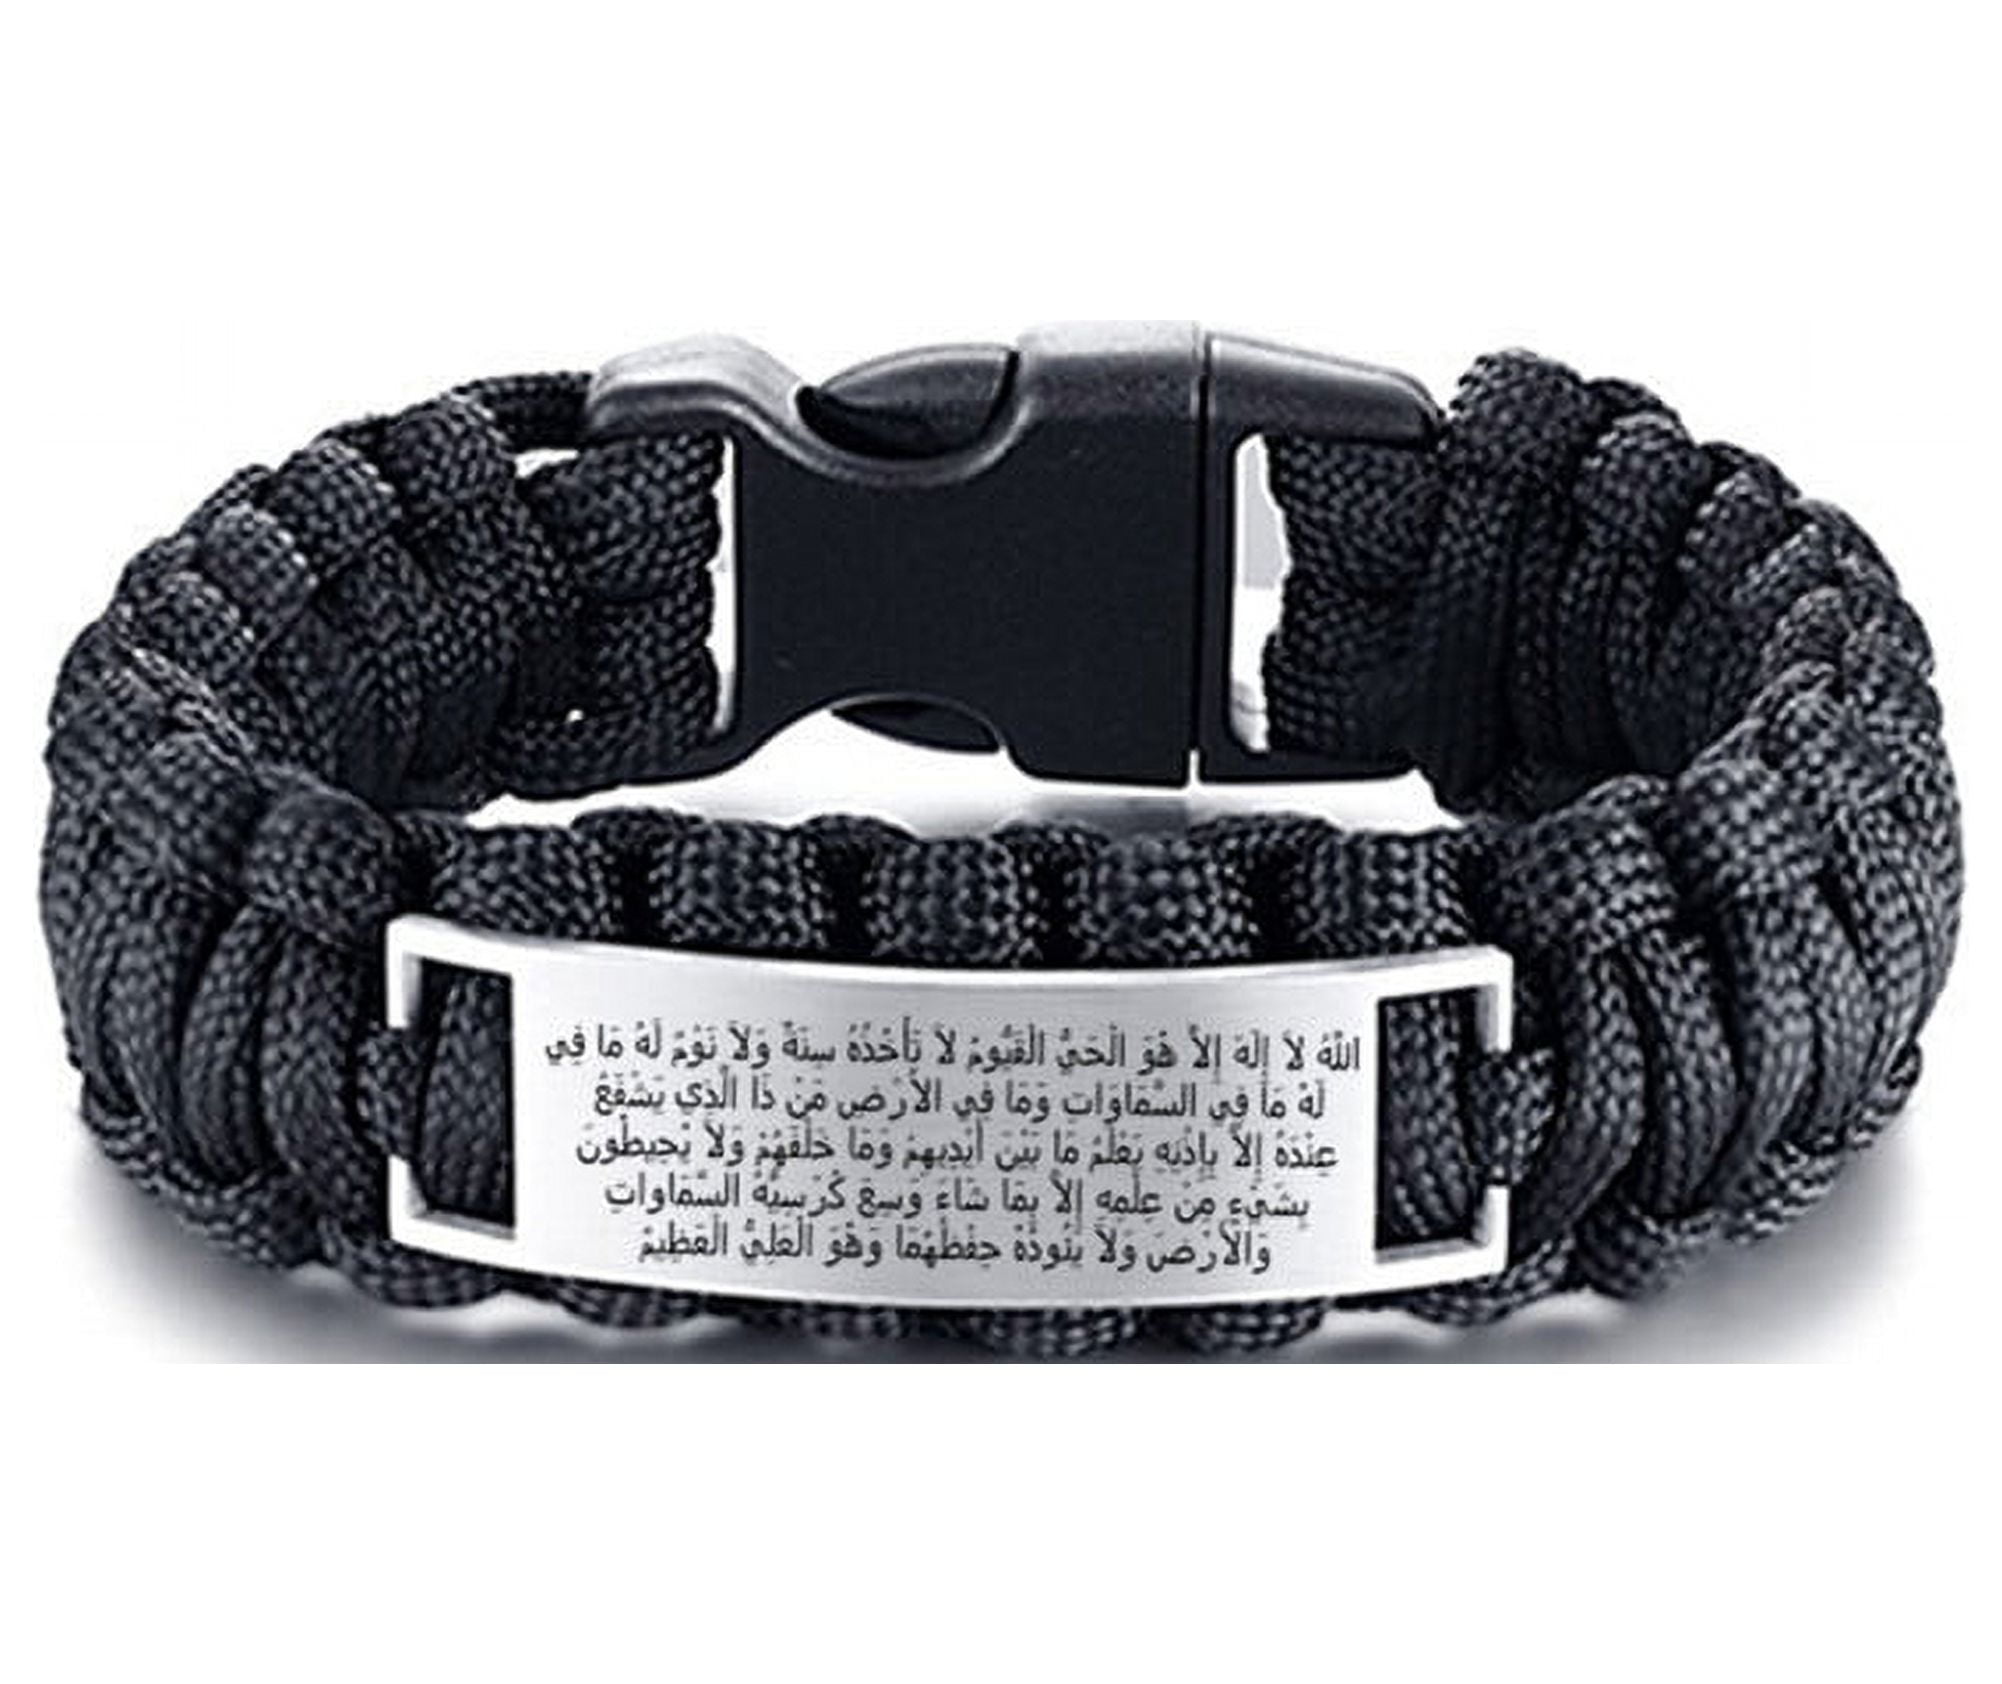 Ayatul Kursi Quran Calligraphy Allah God Amulet Handmade Braided Cord Bracelet Powerful Arabic Verse Protection Bangle Wristband Religious Muslim Isl 8e13ac79 d17c 487d a02f e2408c2718b8.d0b718f2d45119983aa0b167e3fd749e